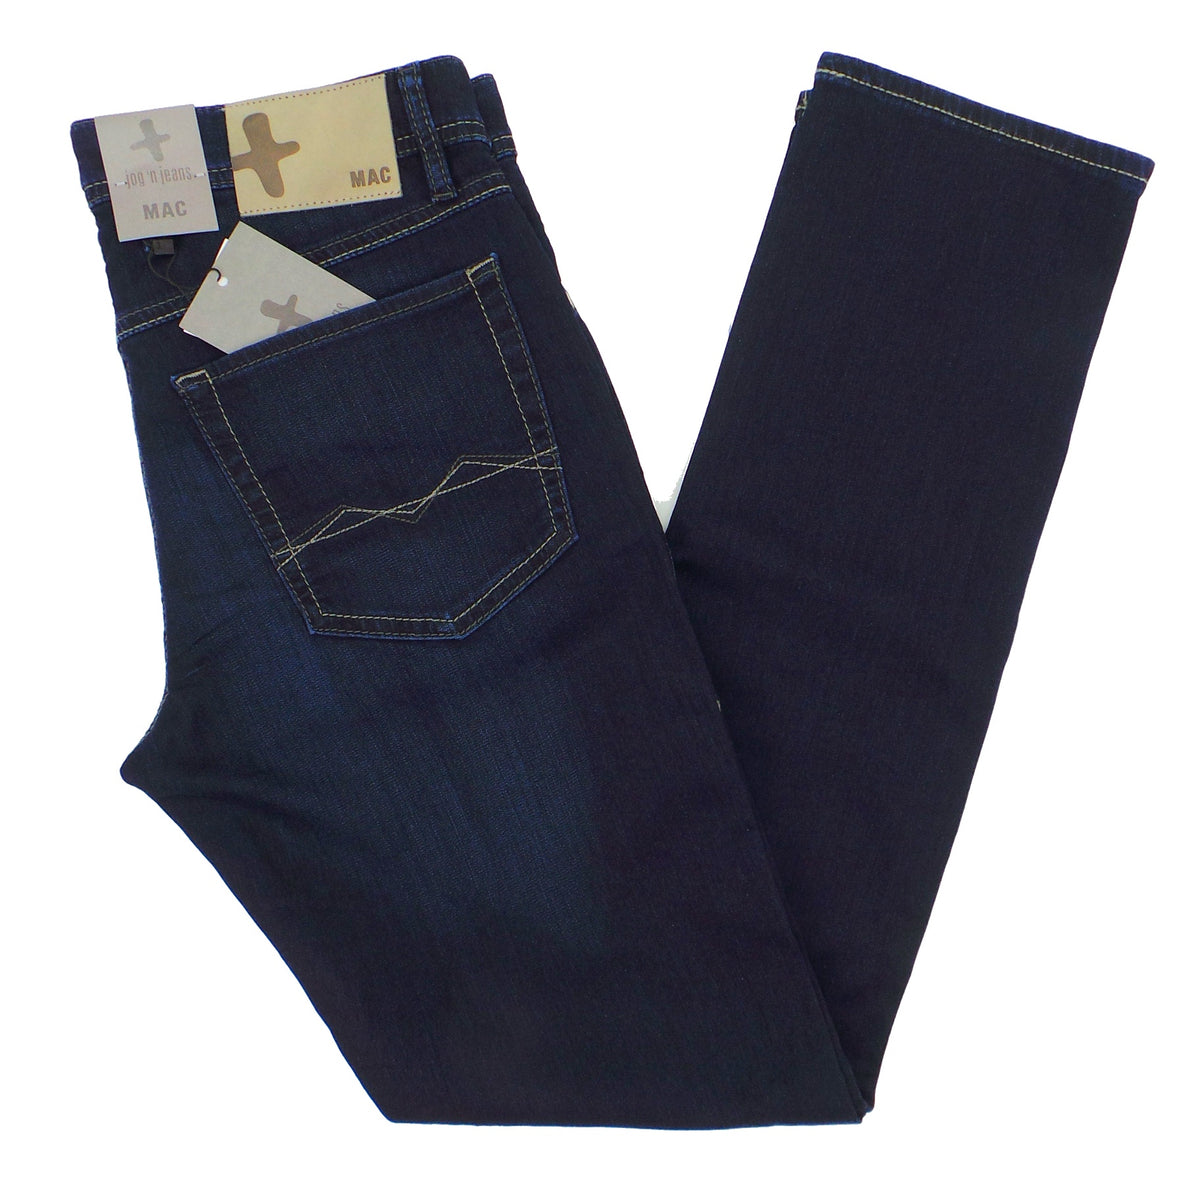 Seattle Thread – Jeans MAC Company